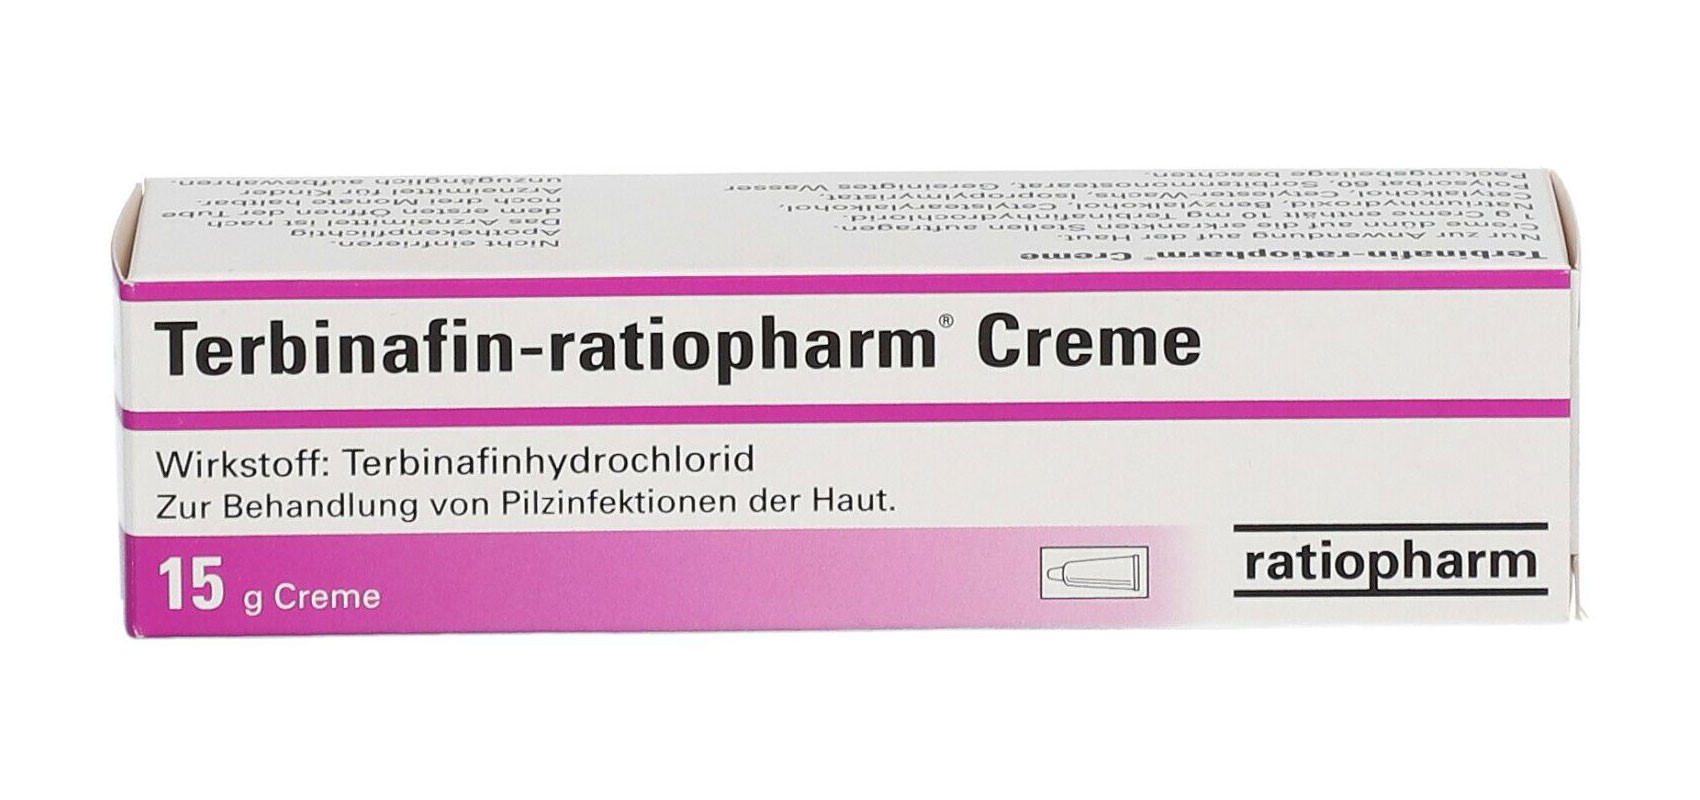 Terbinafin-ratiopharm Creme